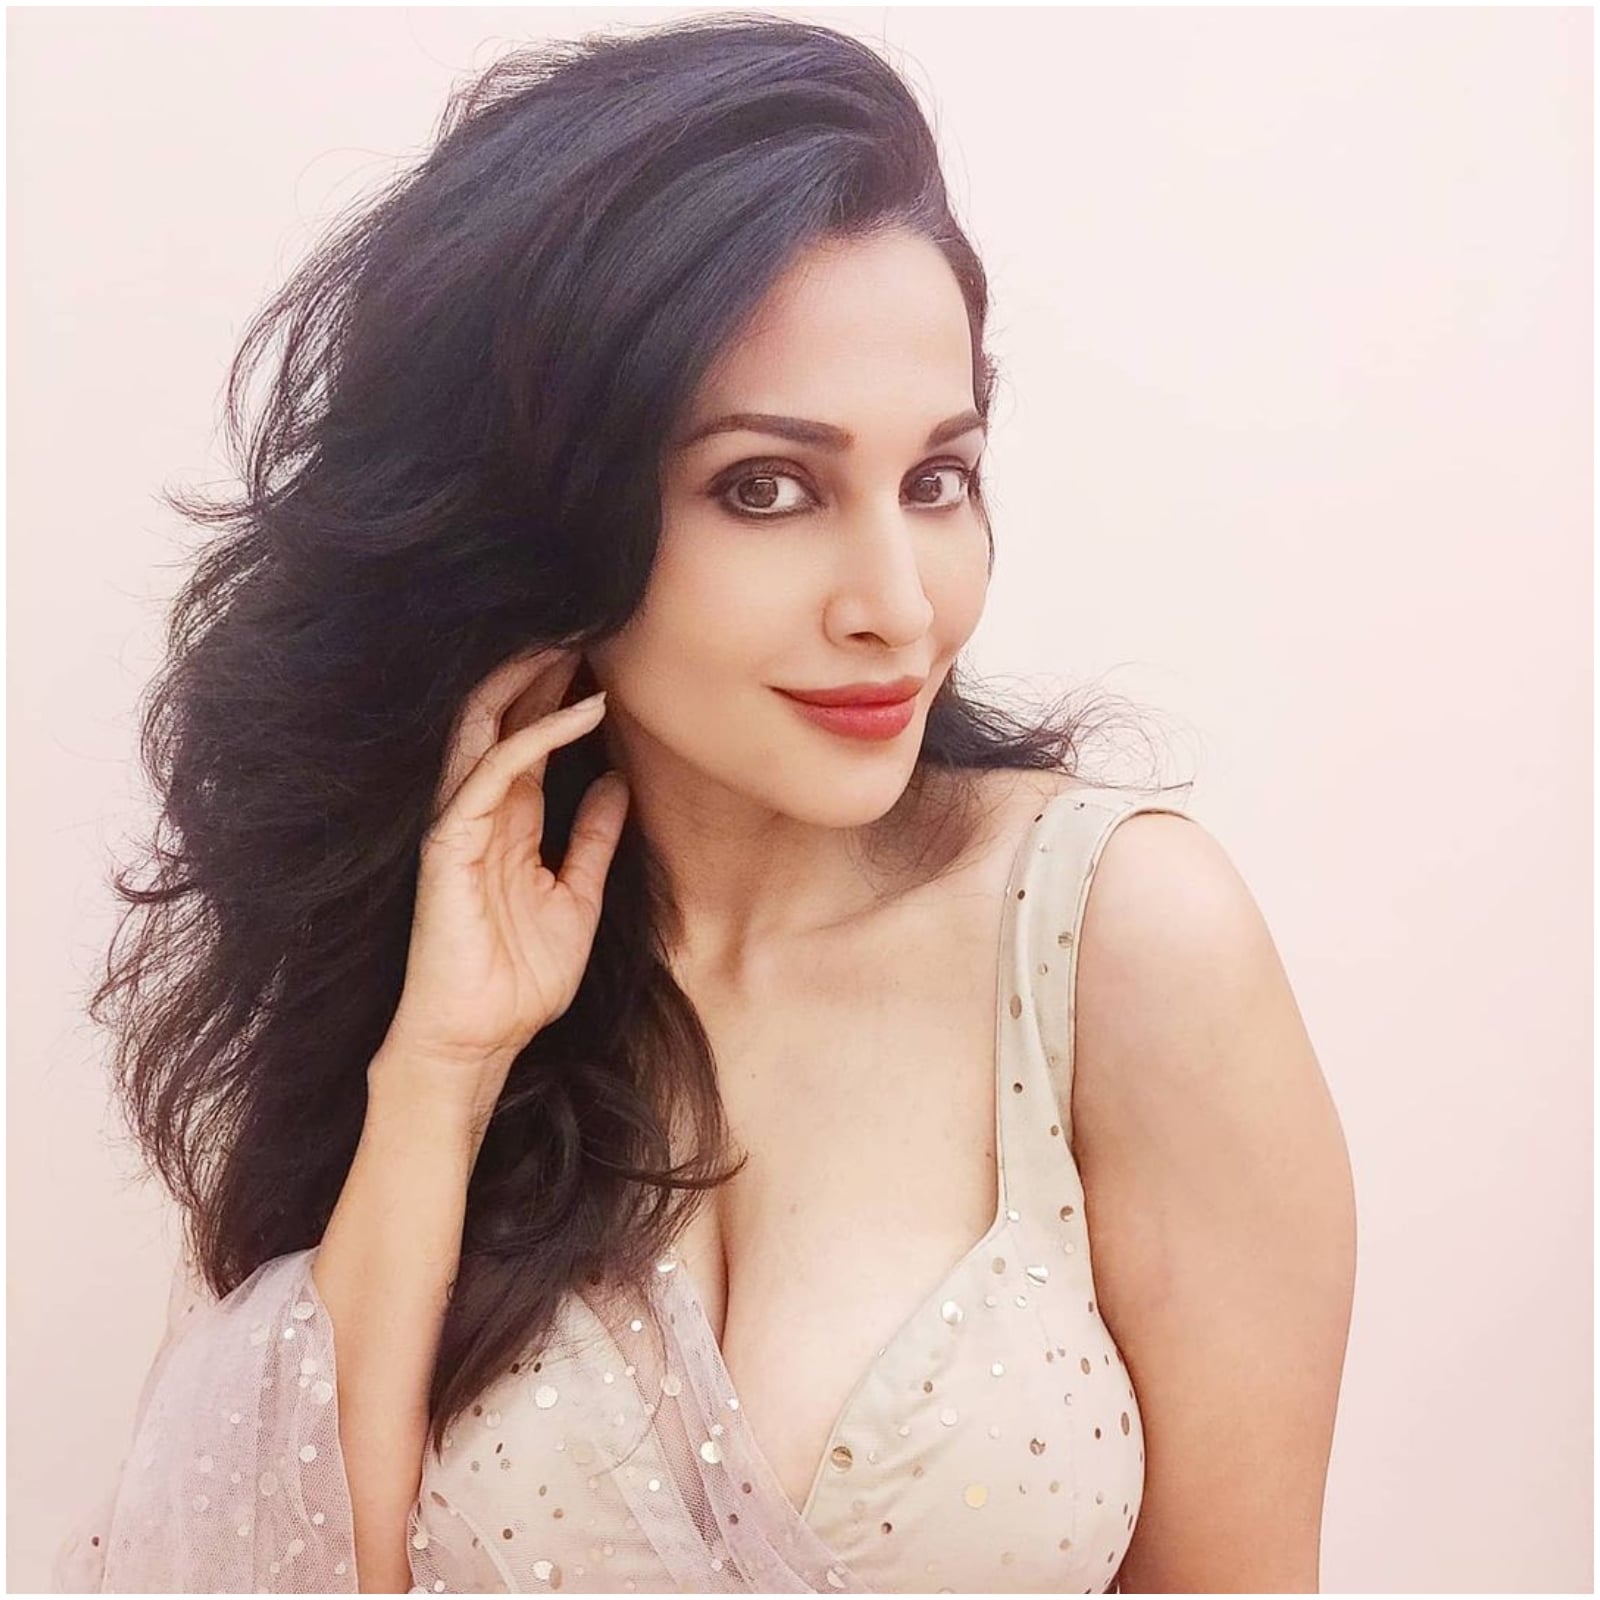 Katrina Sex Video Hot - Raj Kundra Case: 'Gandii Baat' Actress Flora Saini Said No When Approached  for Content on HotShots App - News18